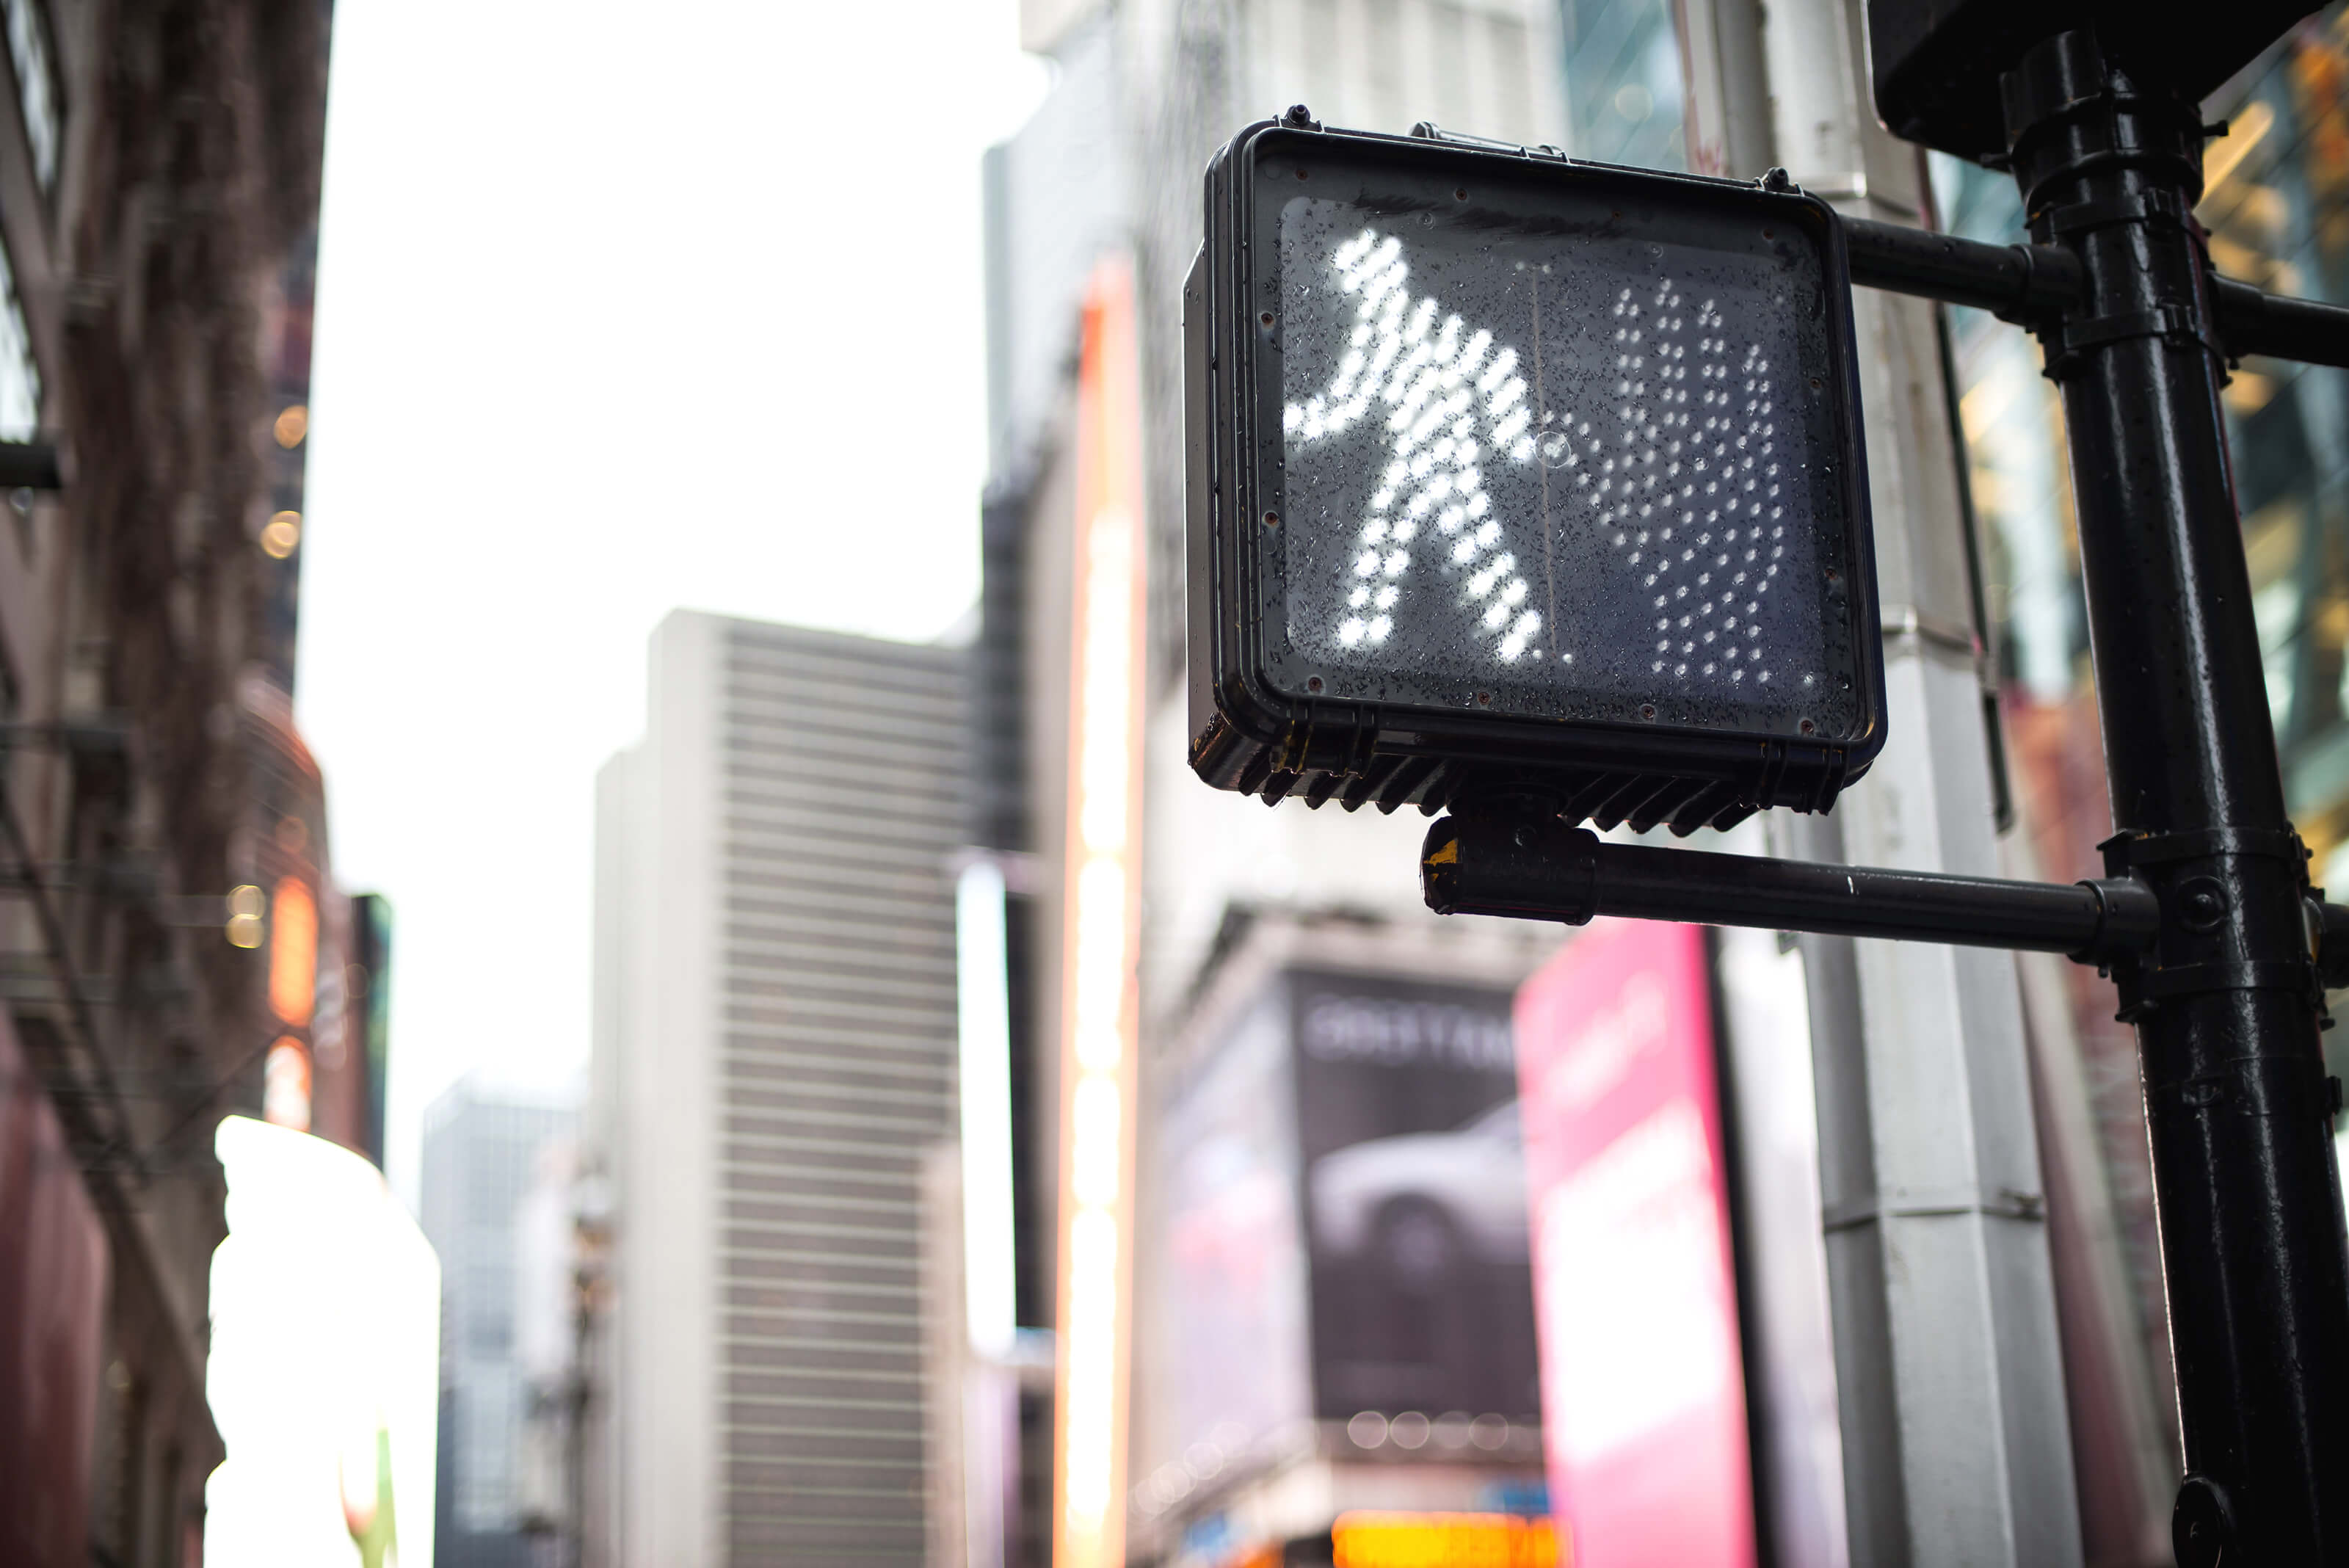 crosswalk sign with "walk" symbol illuminated